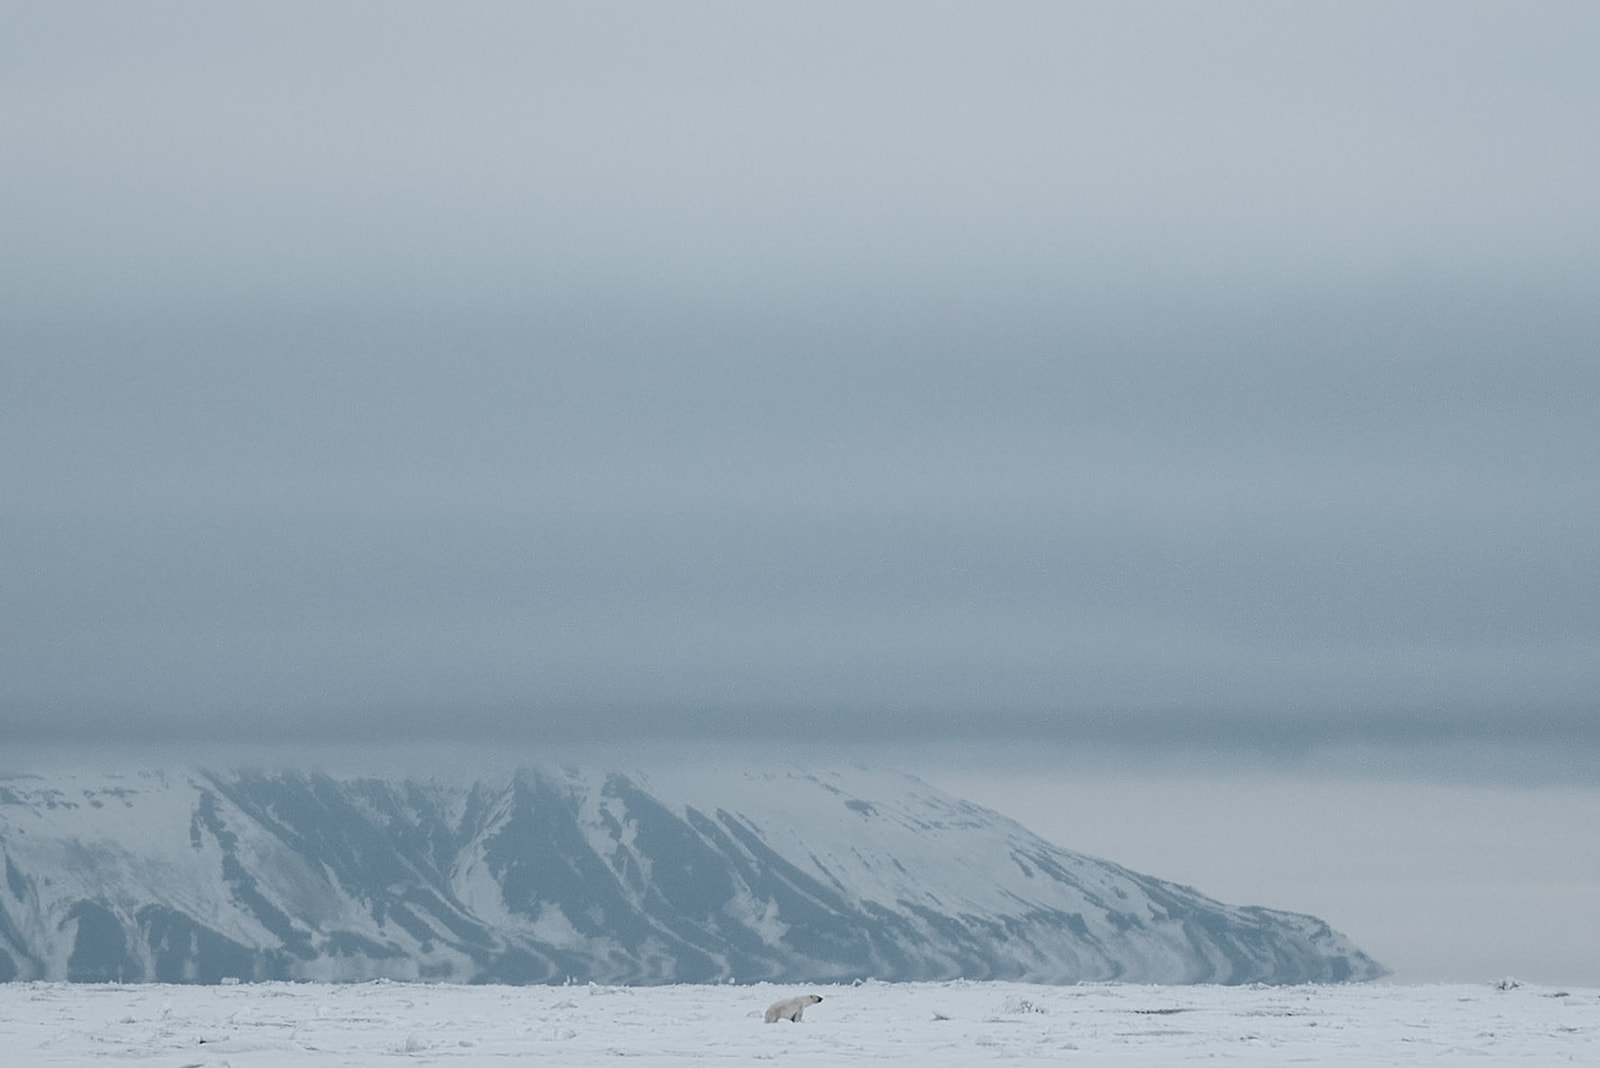 polar bear in the distance on Svalbard